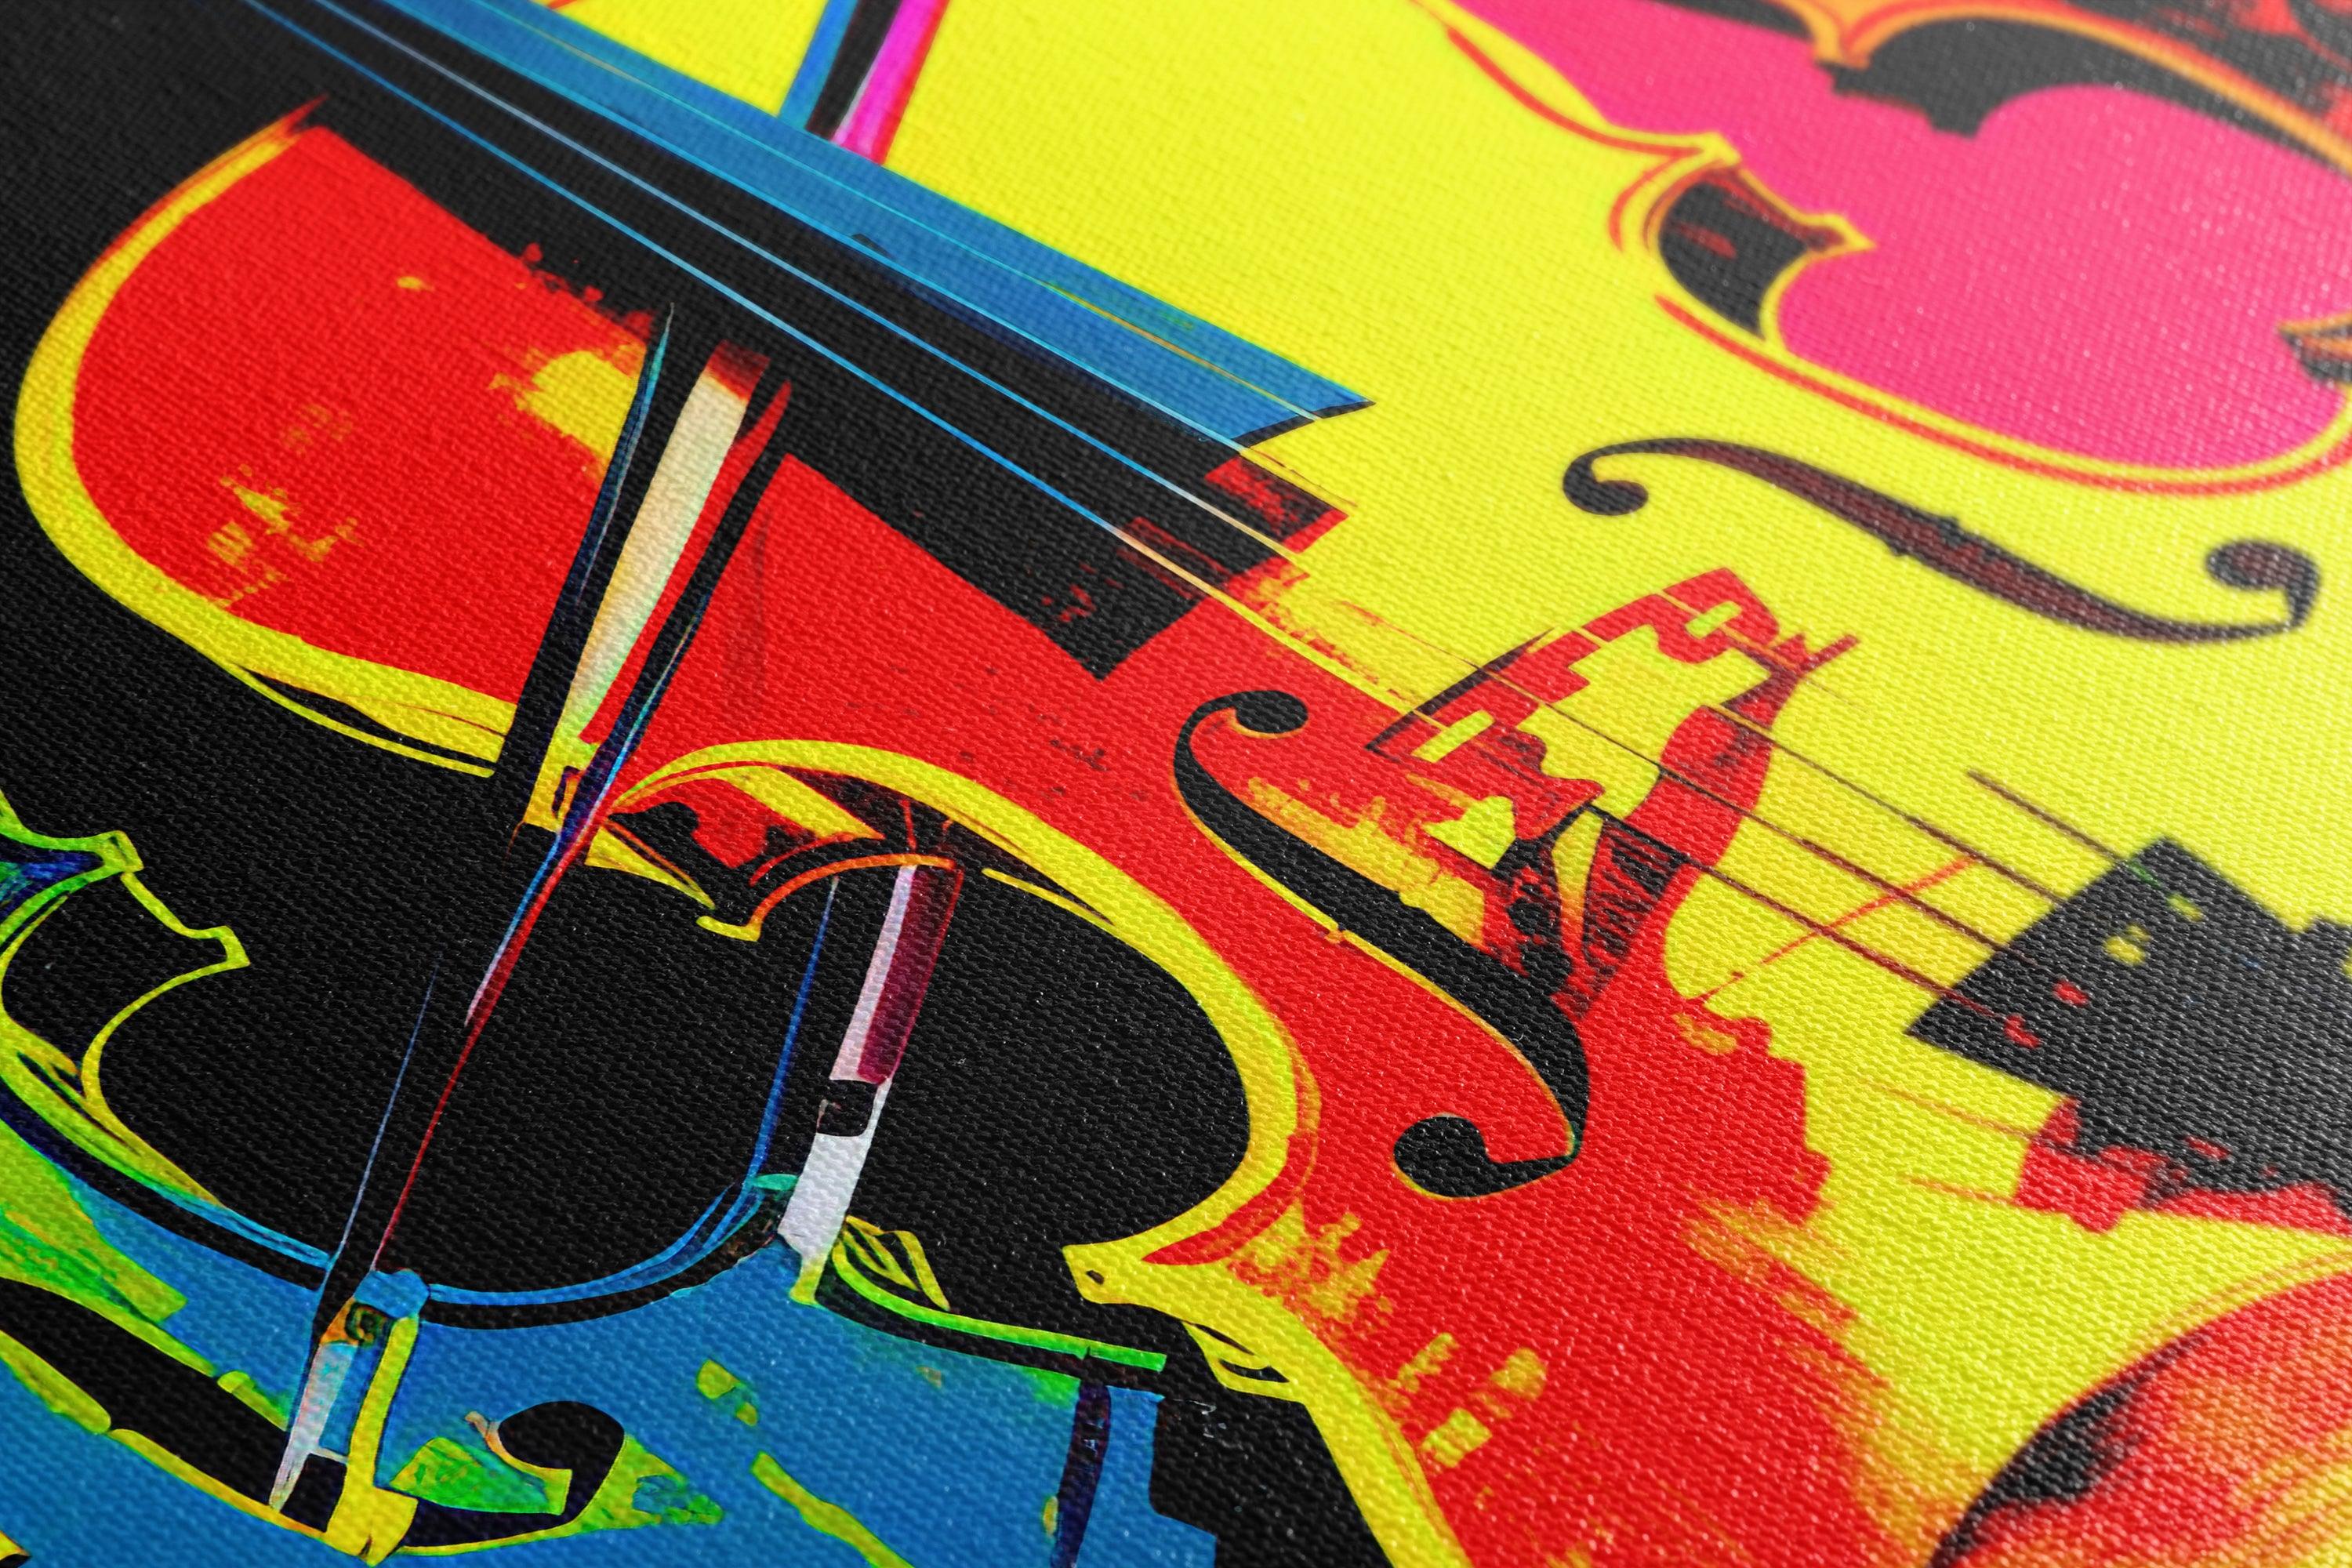 Three Neon Pop Art Violins - Canvas Print - Artoholica Ready to Hang Canvas Print